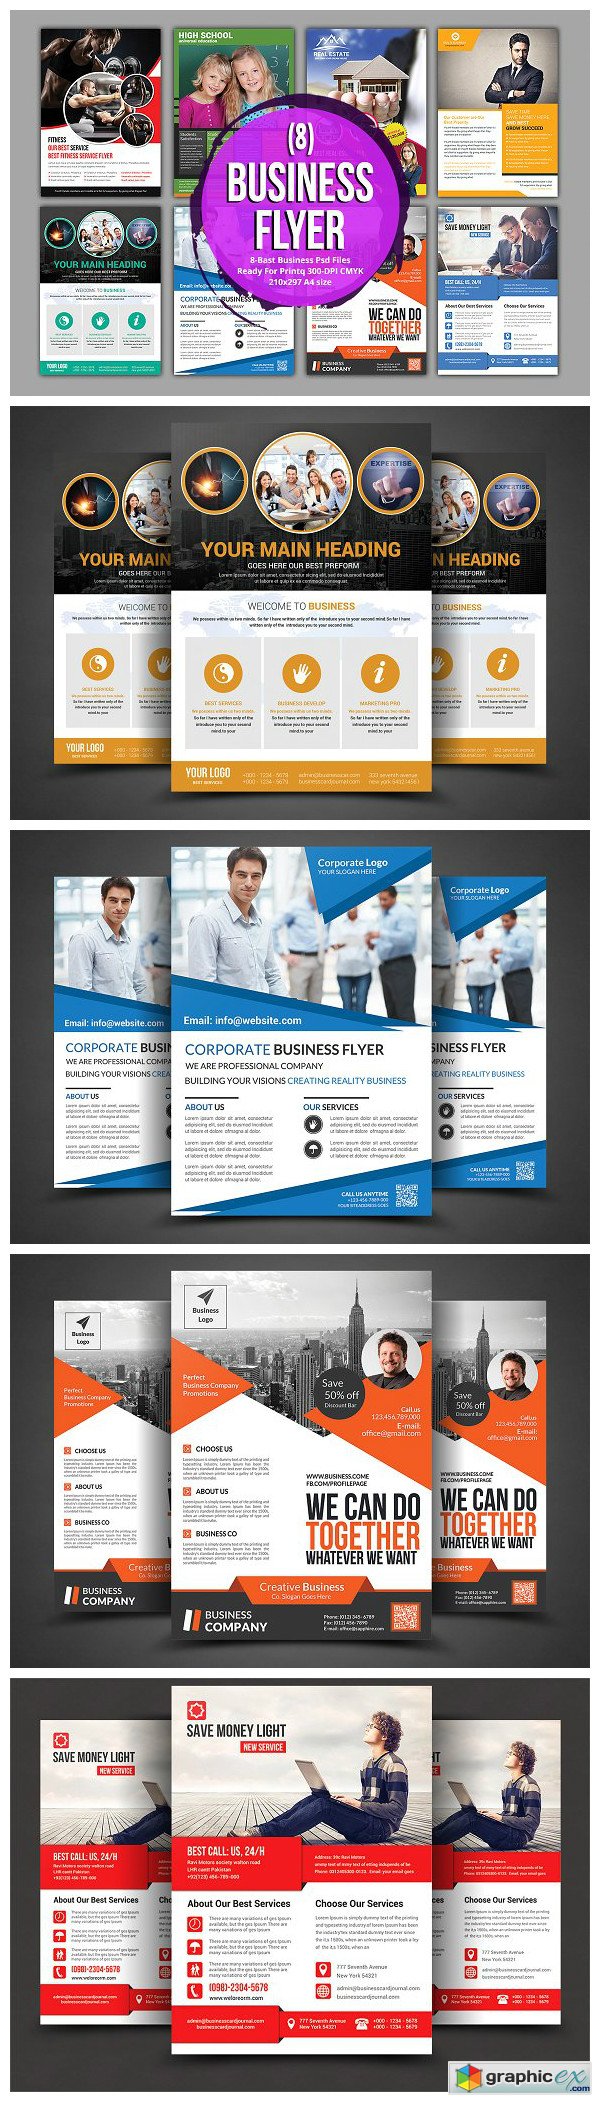 8 Corporate Business Flyer Bundle